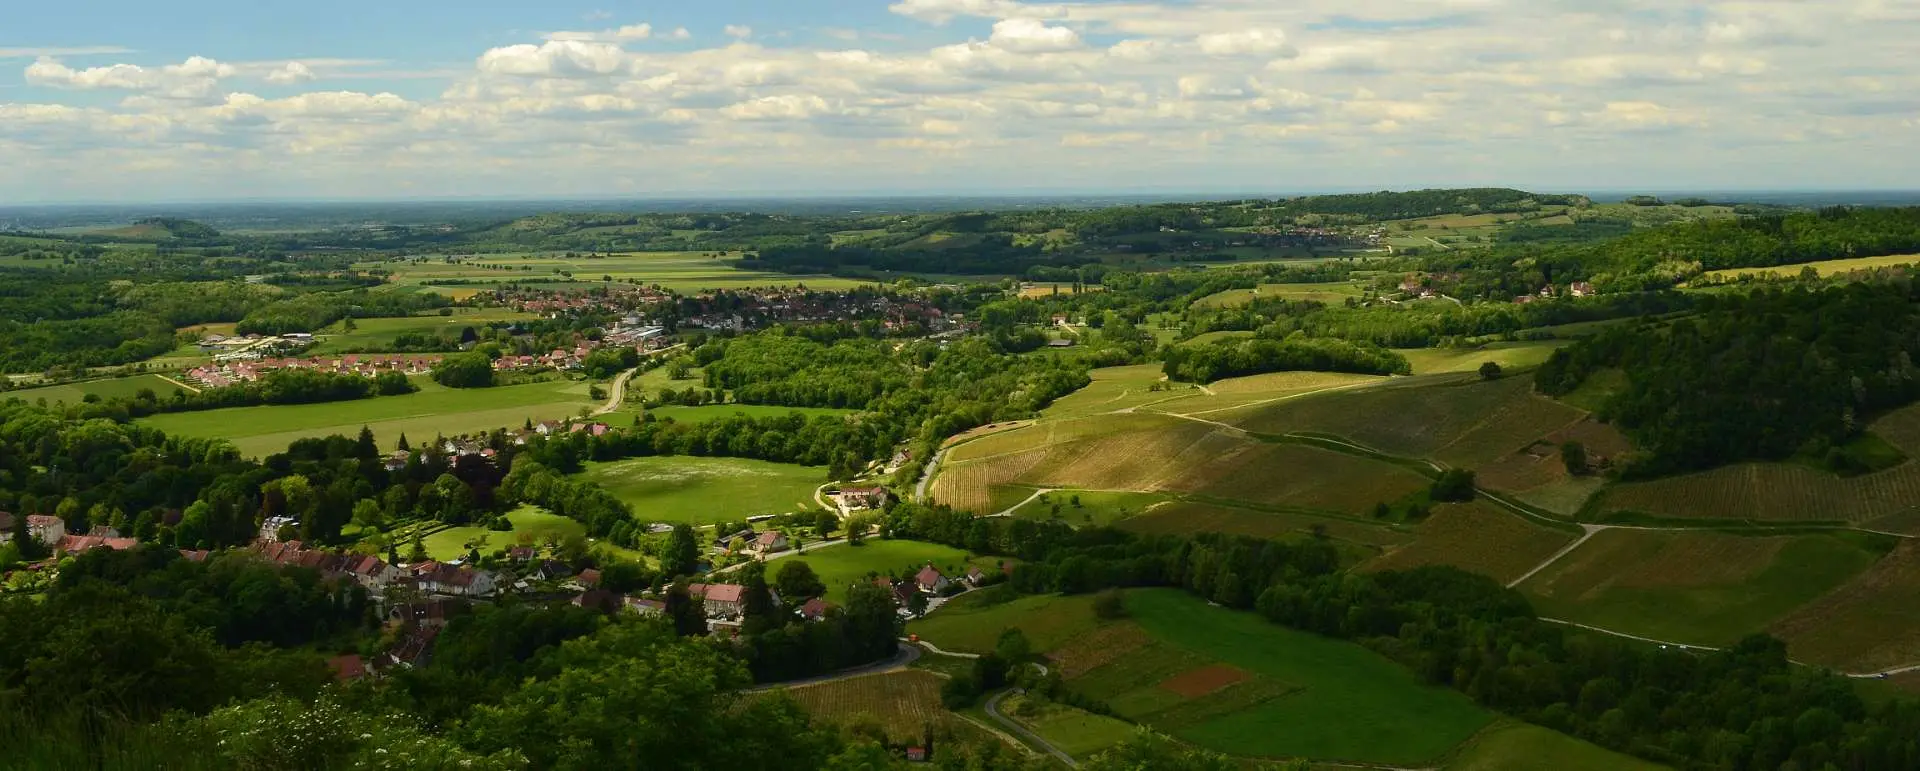 Borgoña-Franco Condado - el destino para grupos